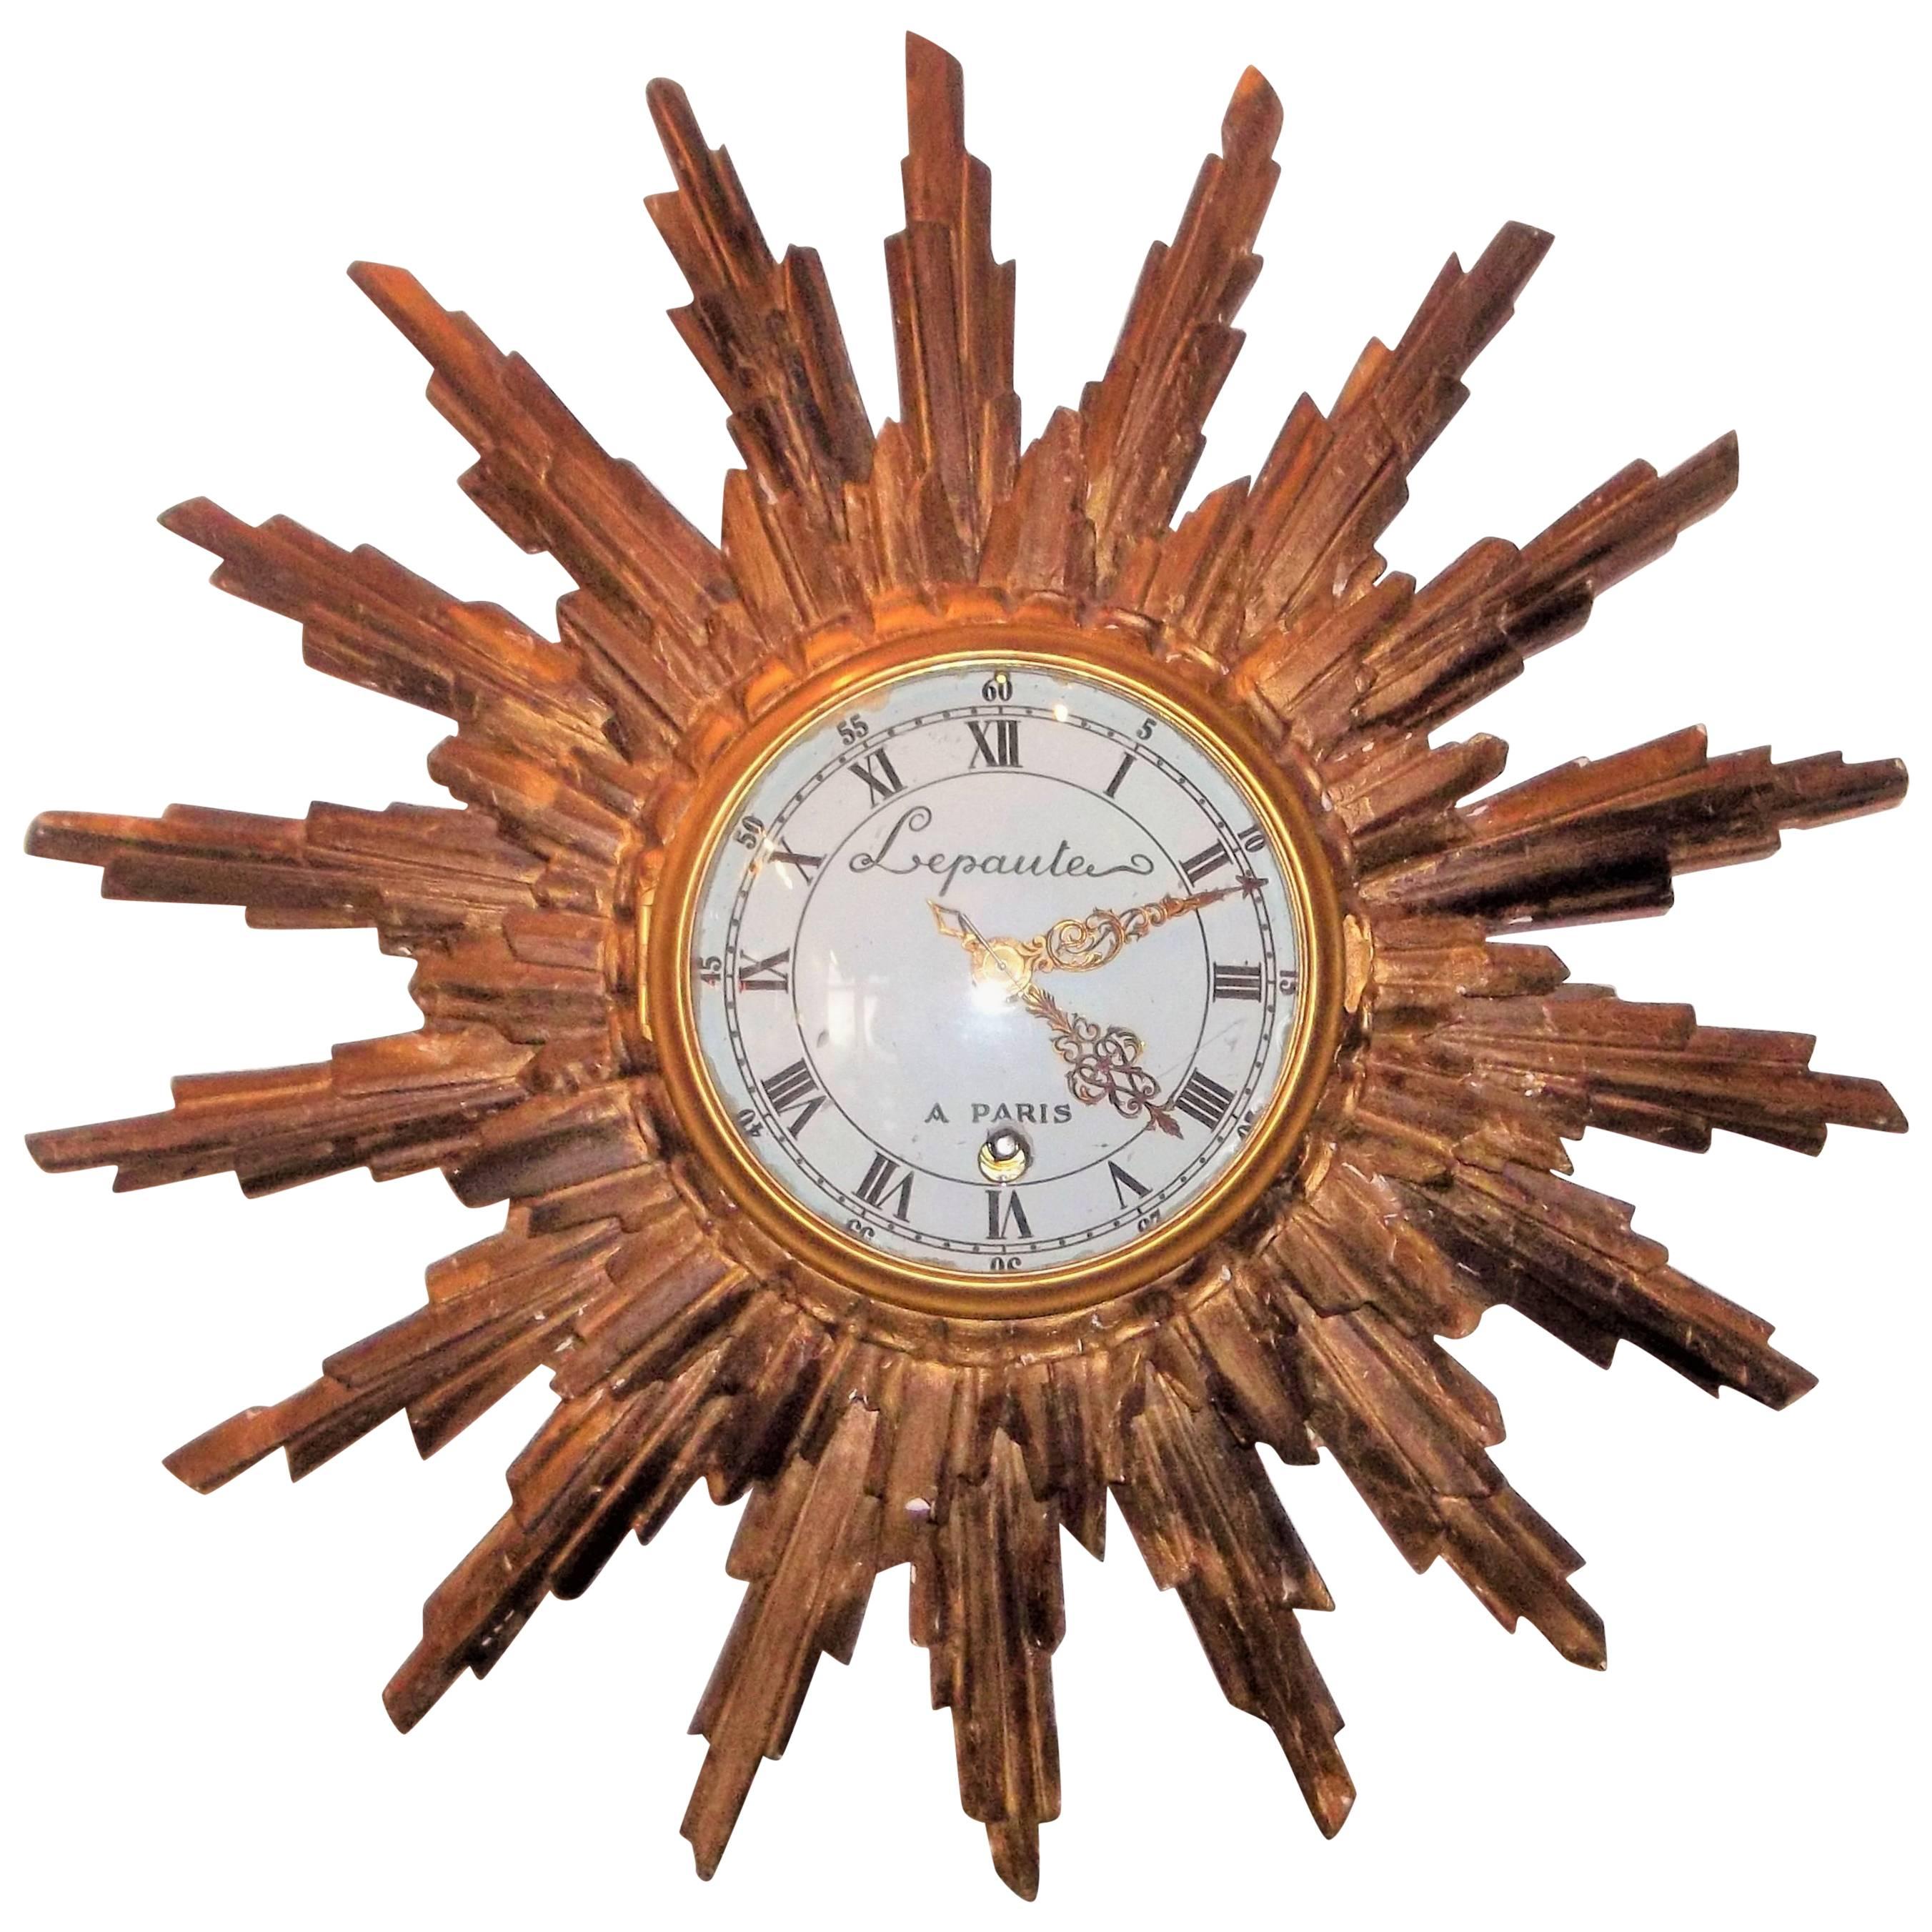 Carved Giltwood Sunburst with Clock Signed Lepaute a Paris